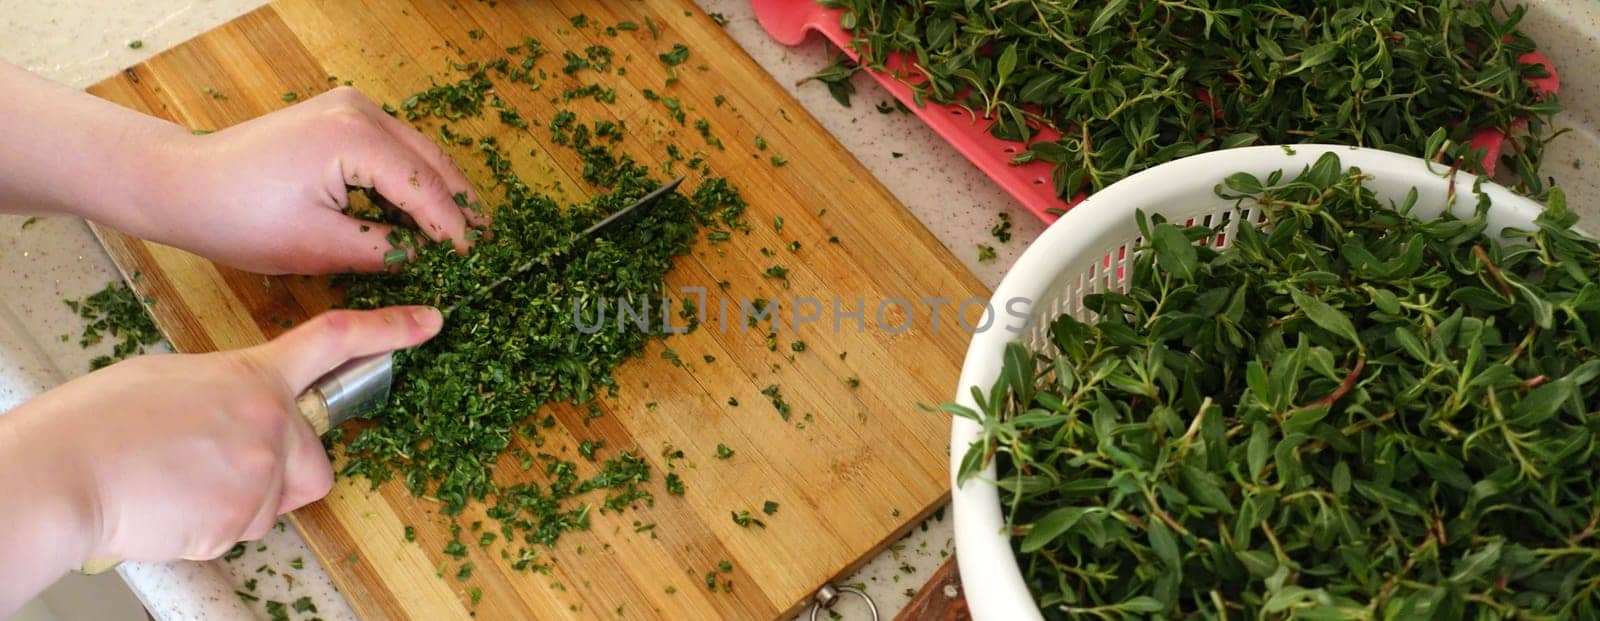 In Turkey, chopping madımak grass from herbal food, Madımak grass for yozgat madımak dish, by nhatipoglu